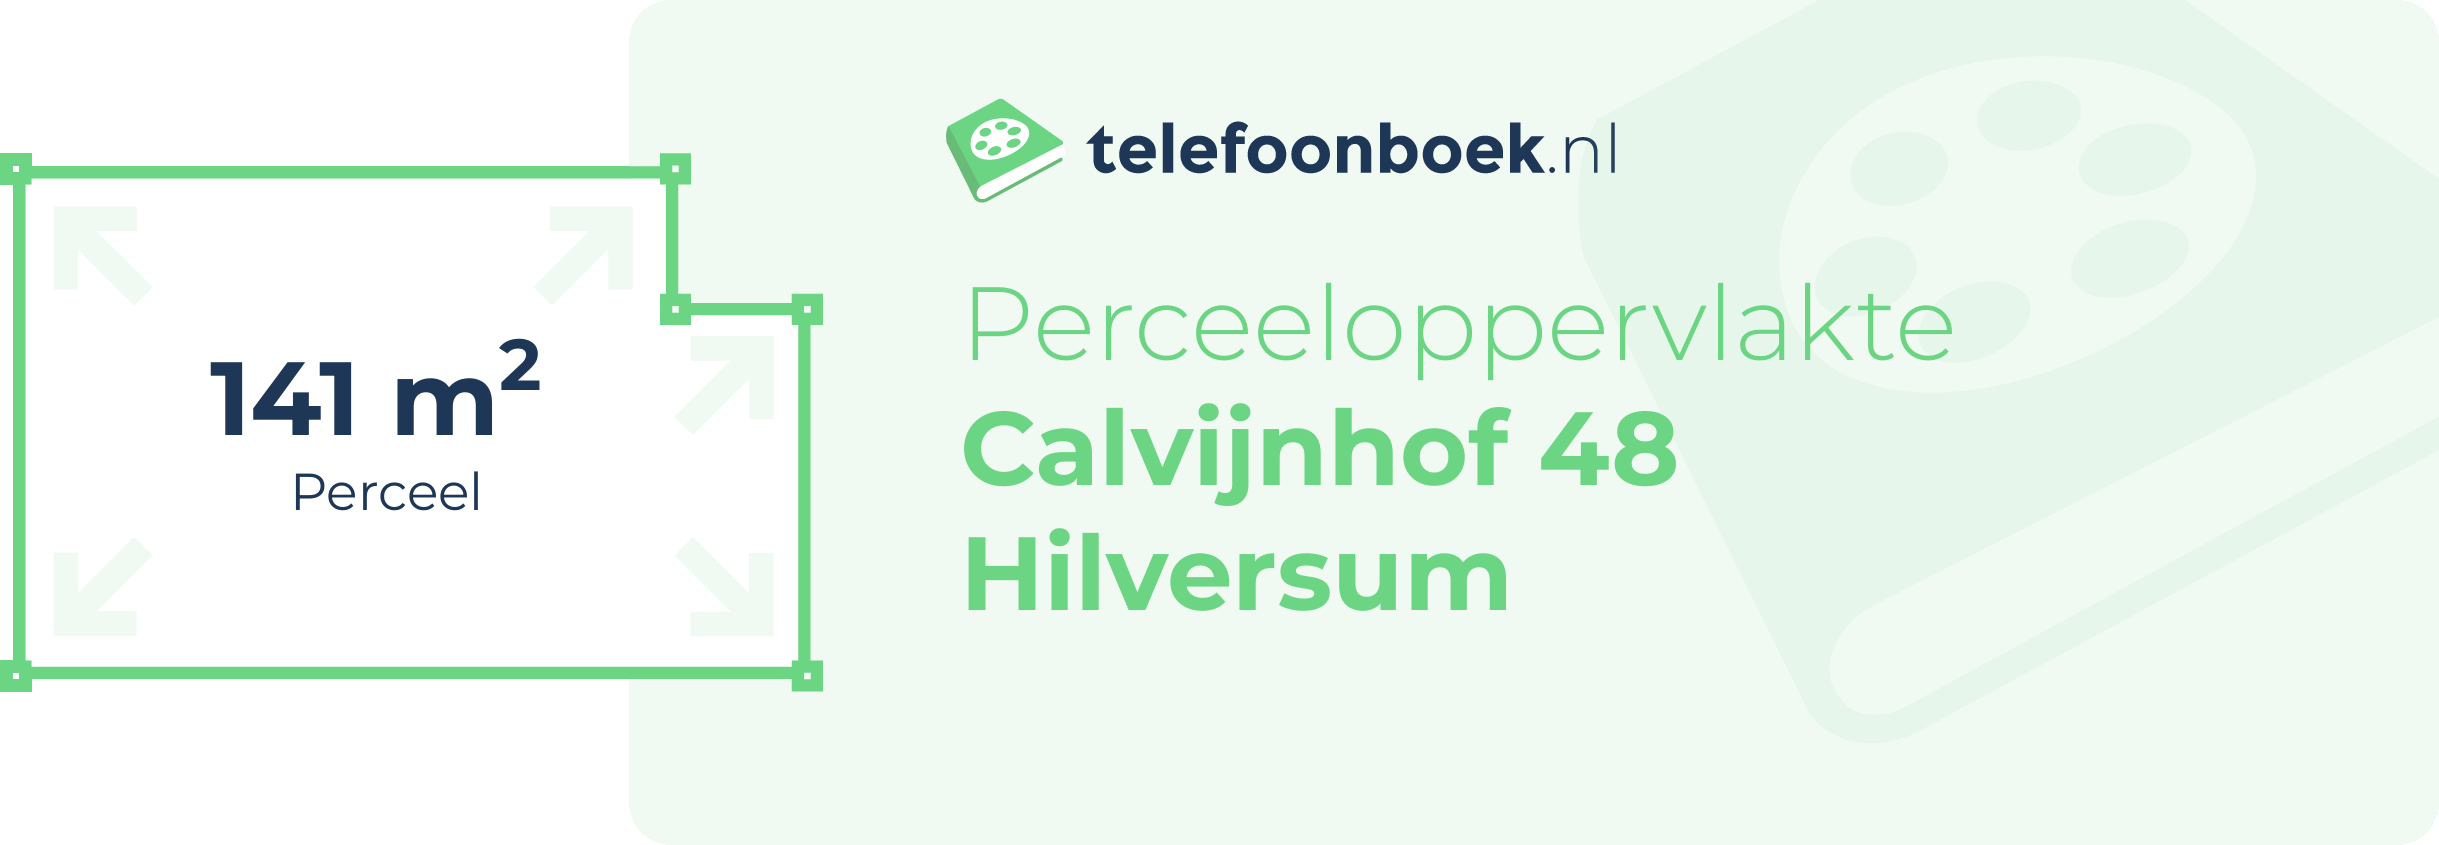 Perceeloppervlakte Calvijnhof 48 Hilversum